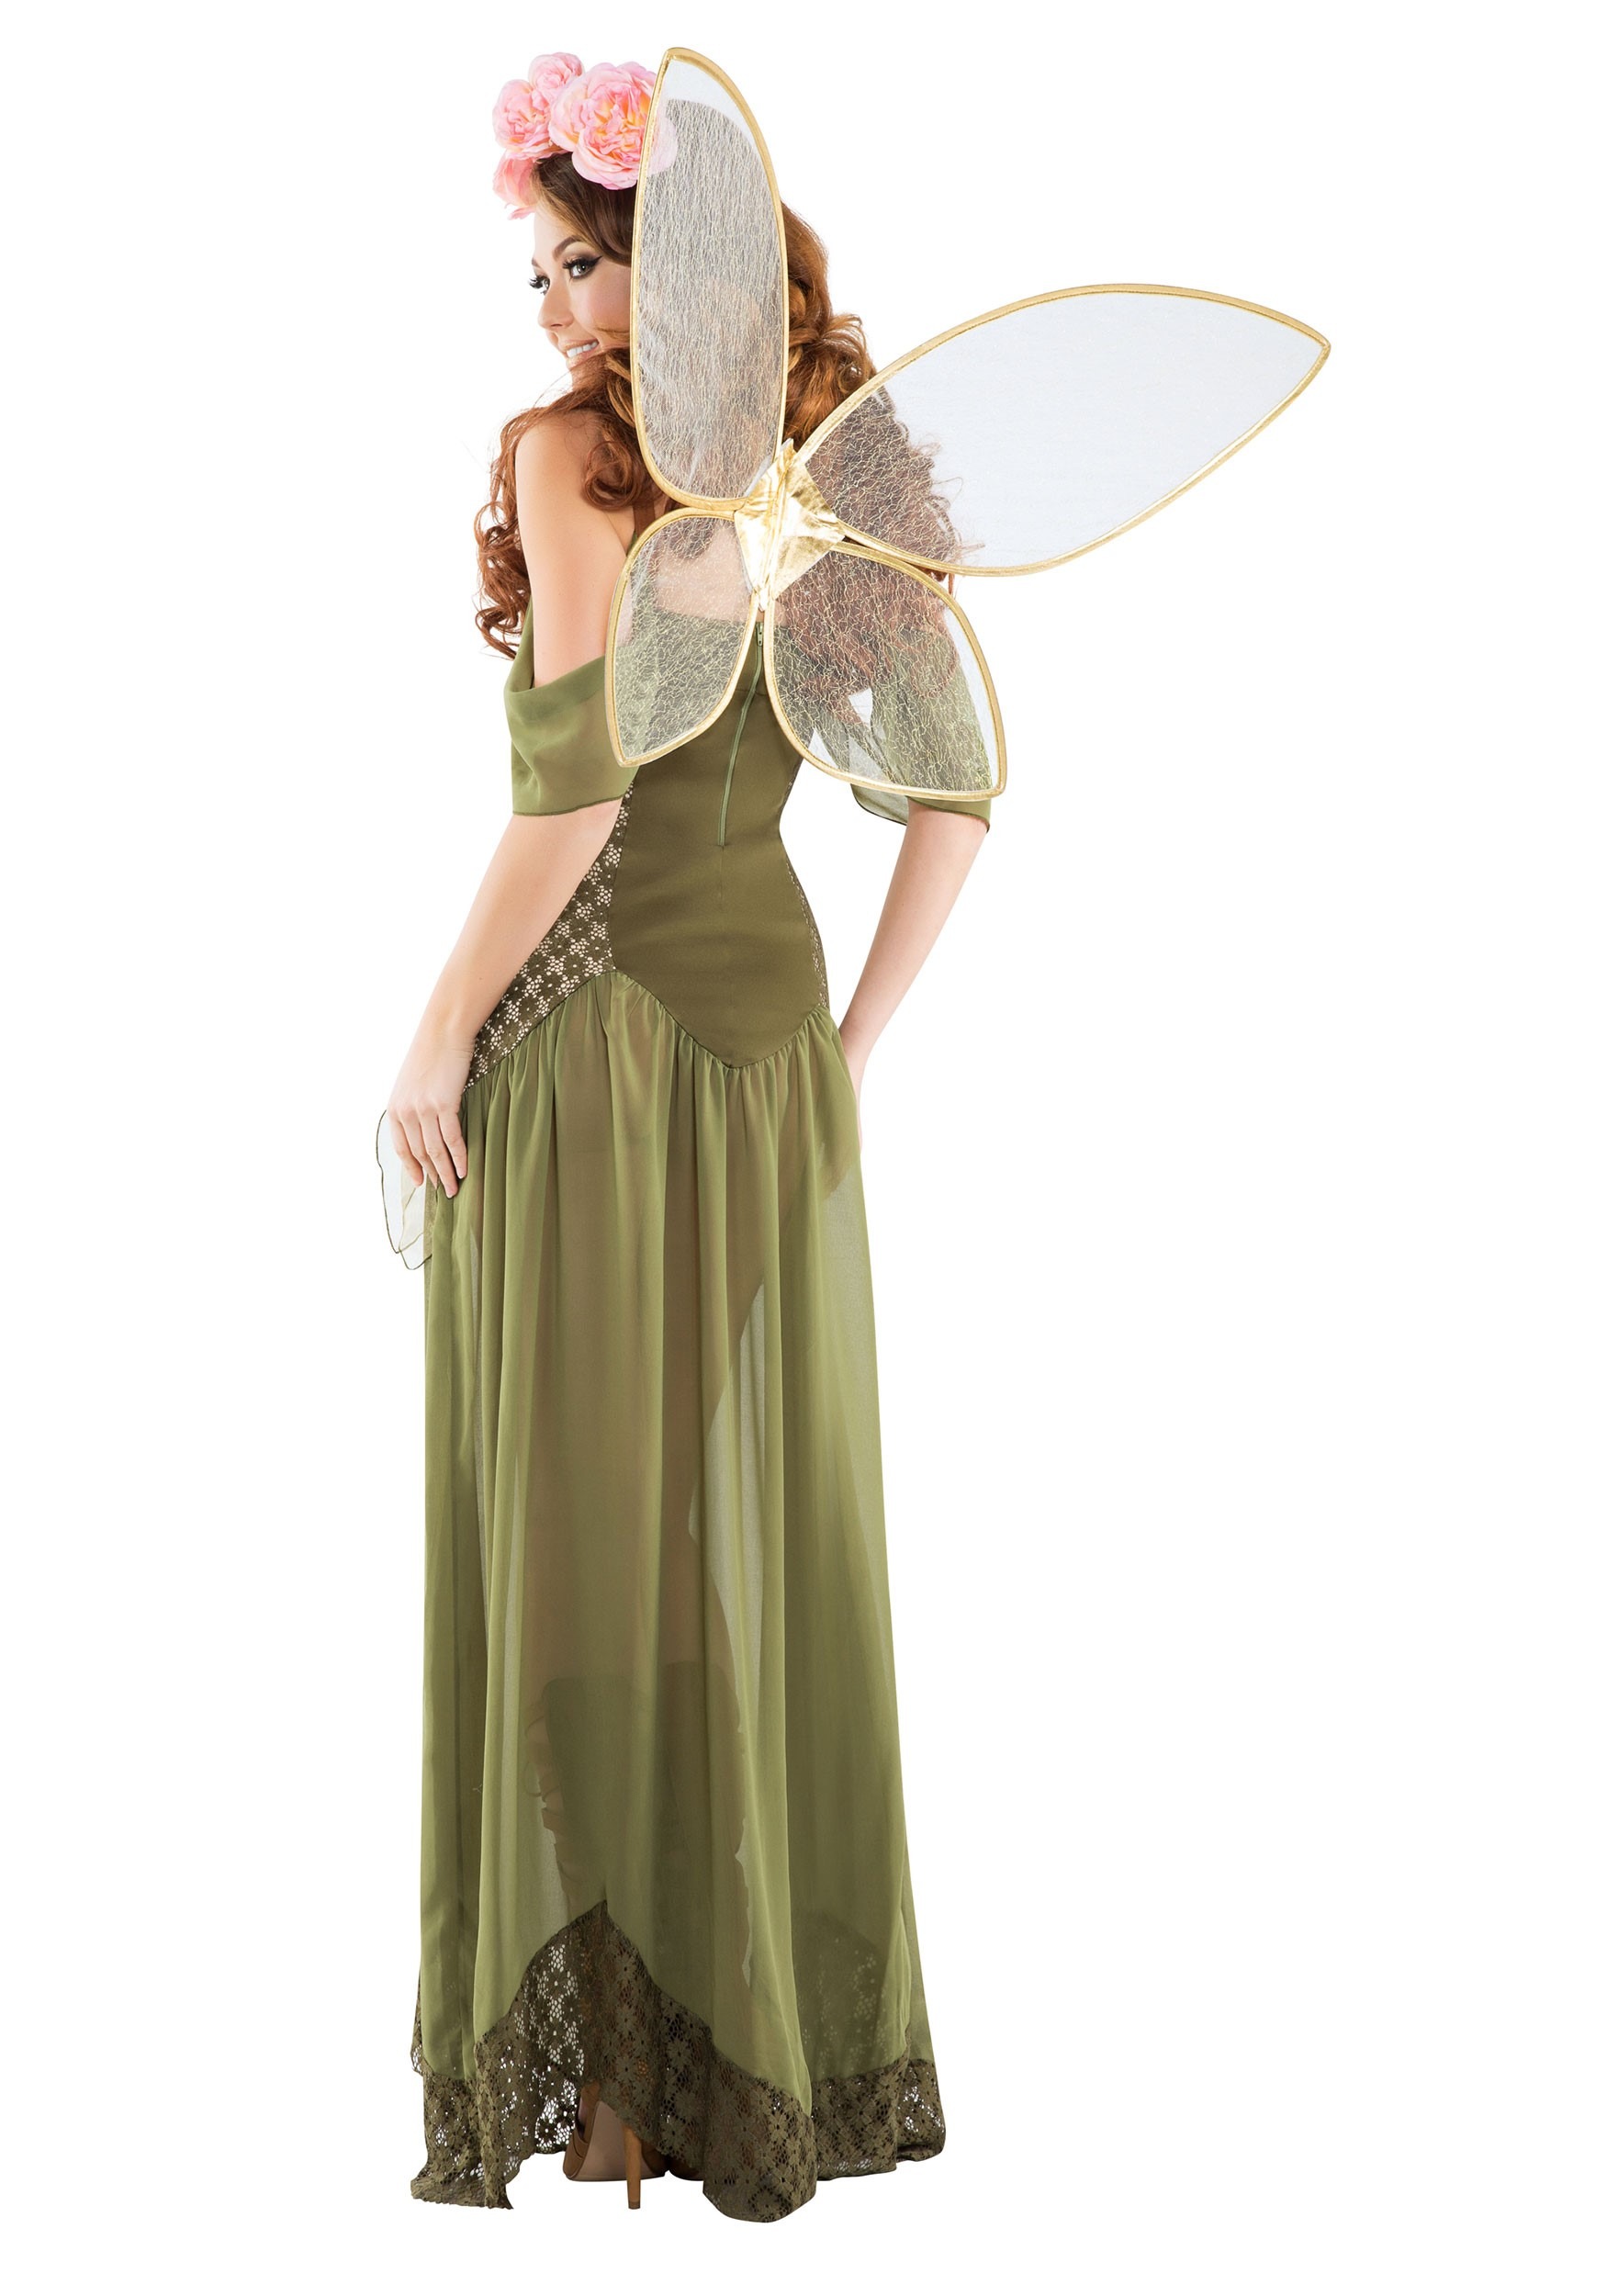 Eden the Garden Fairy Princess Costume Chasing Fireflies 4 5 6 7 8 9 10 11 12 